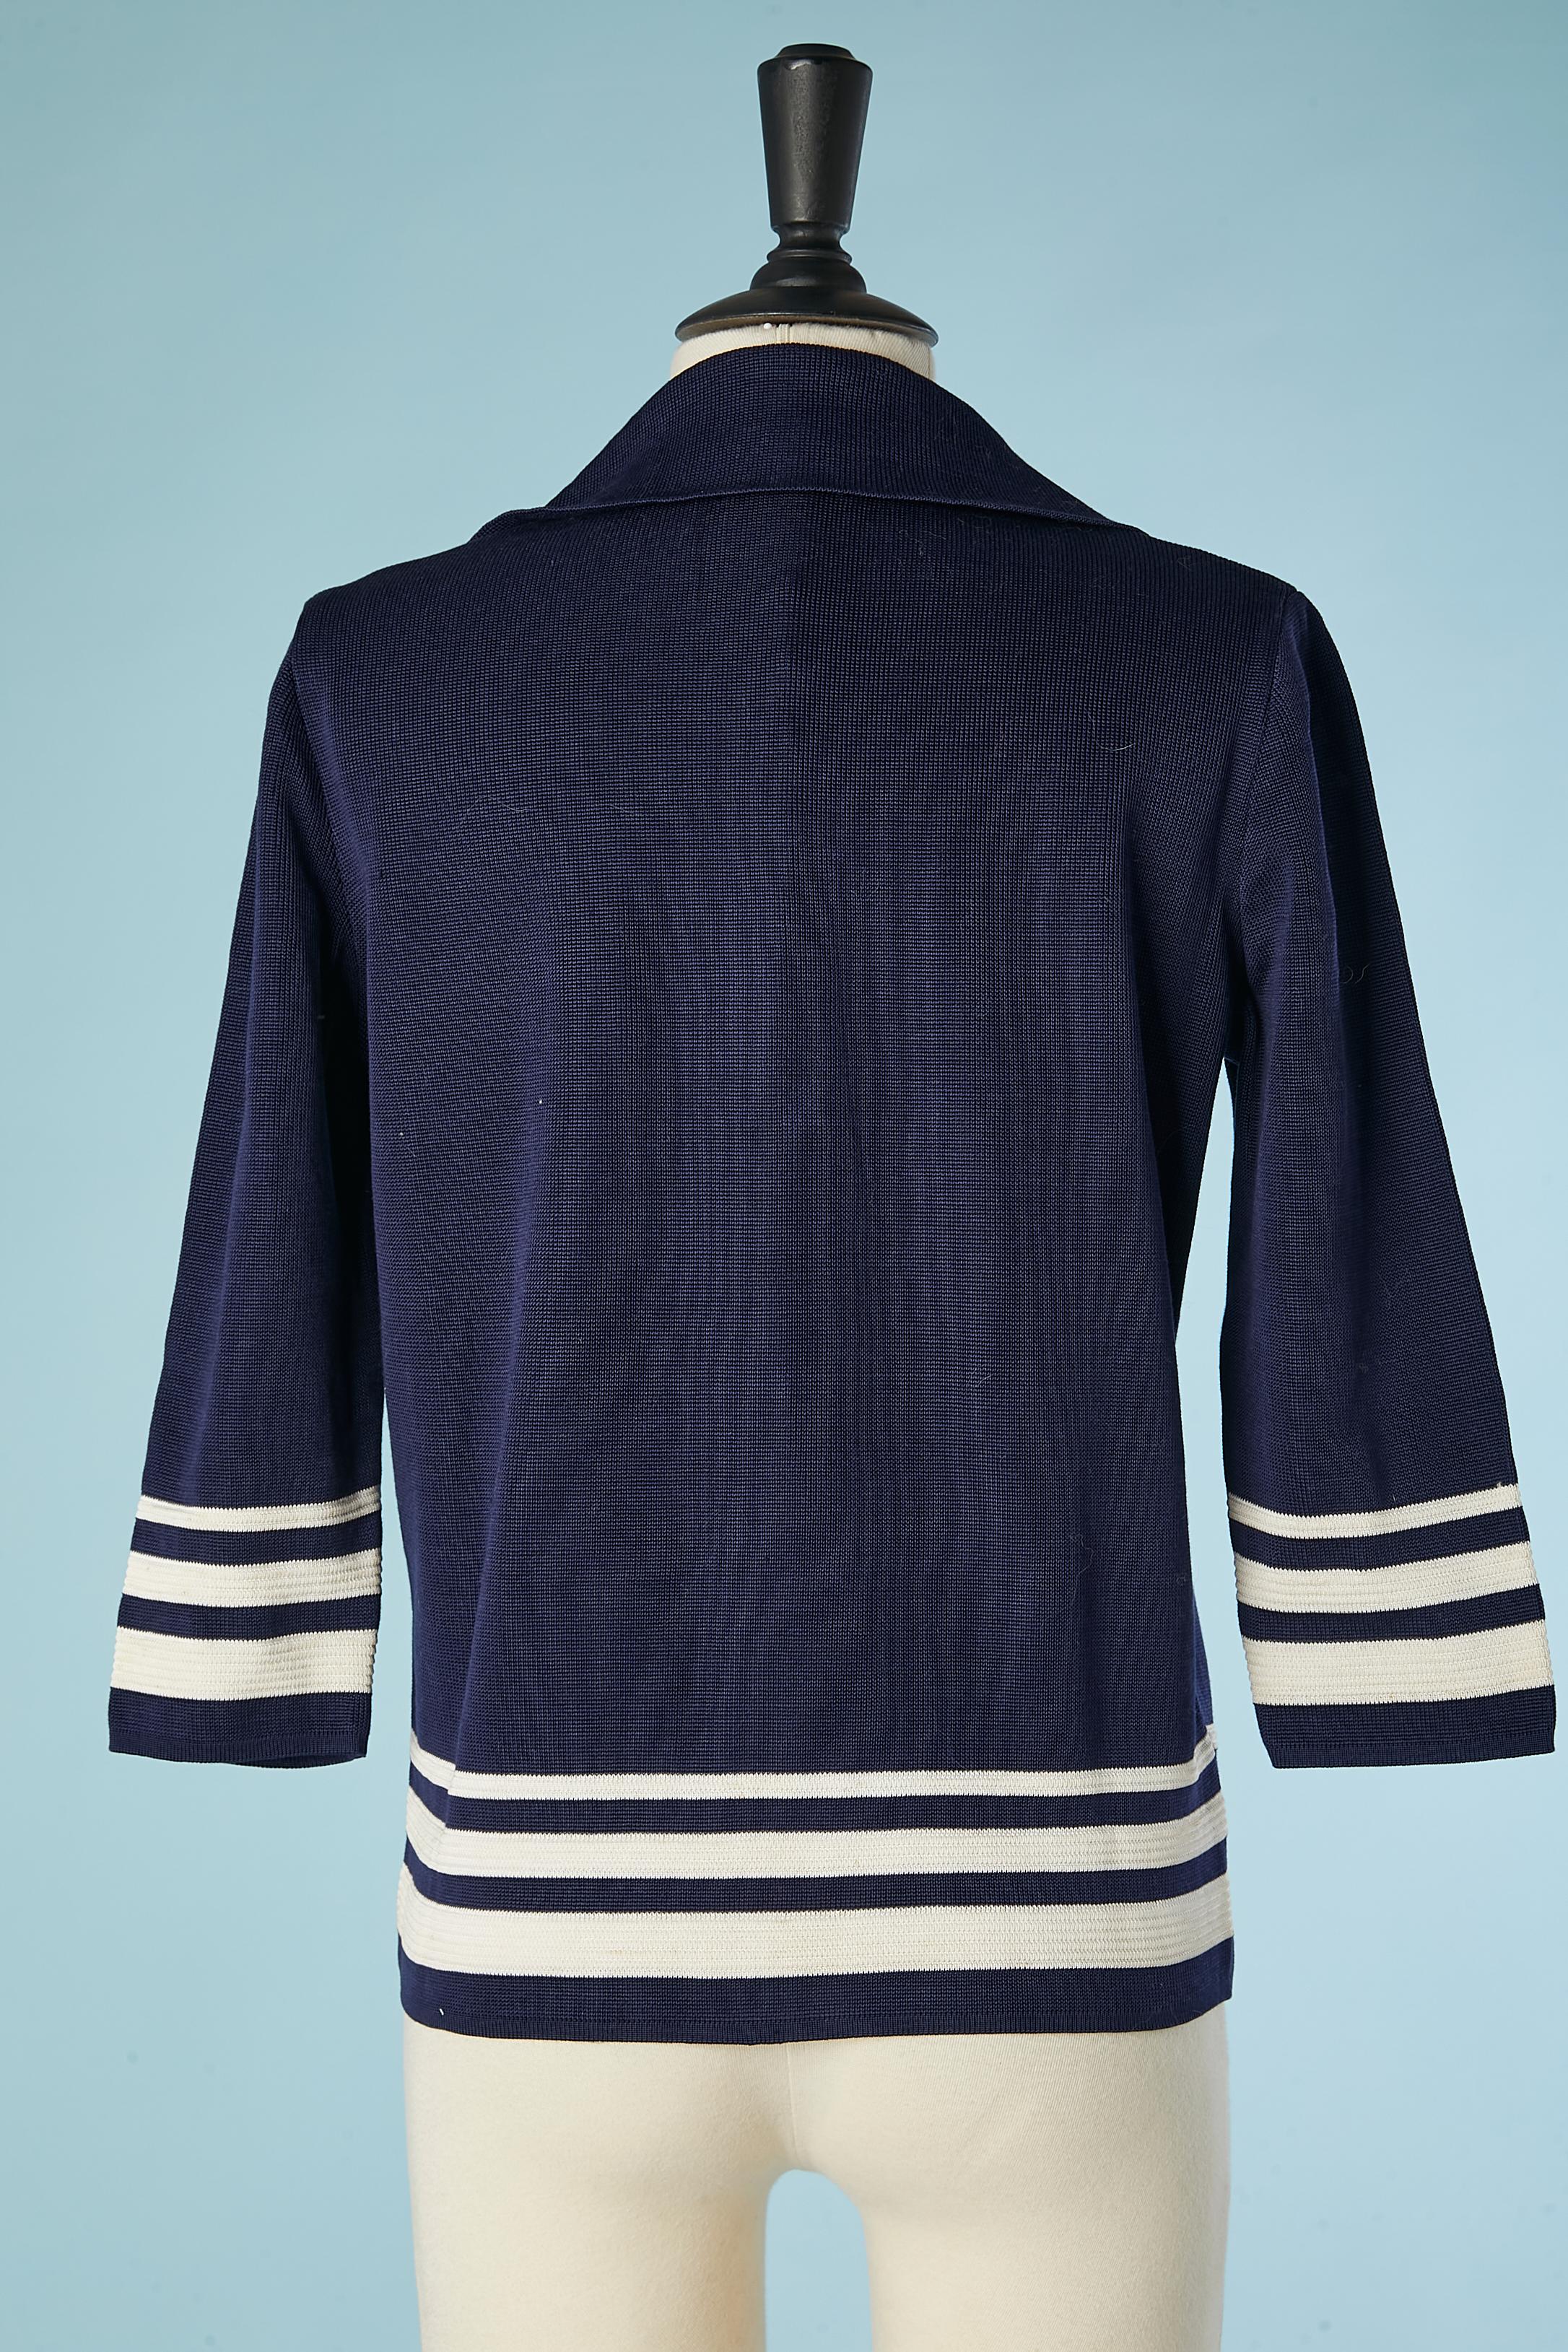 Women's Navy blue rayon knit polo-shirt with white stripes Jeanne Lanvin Castillo 